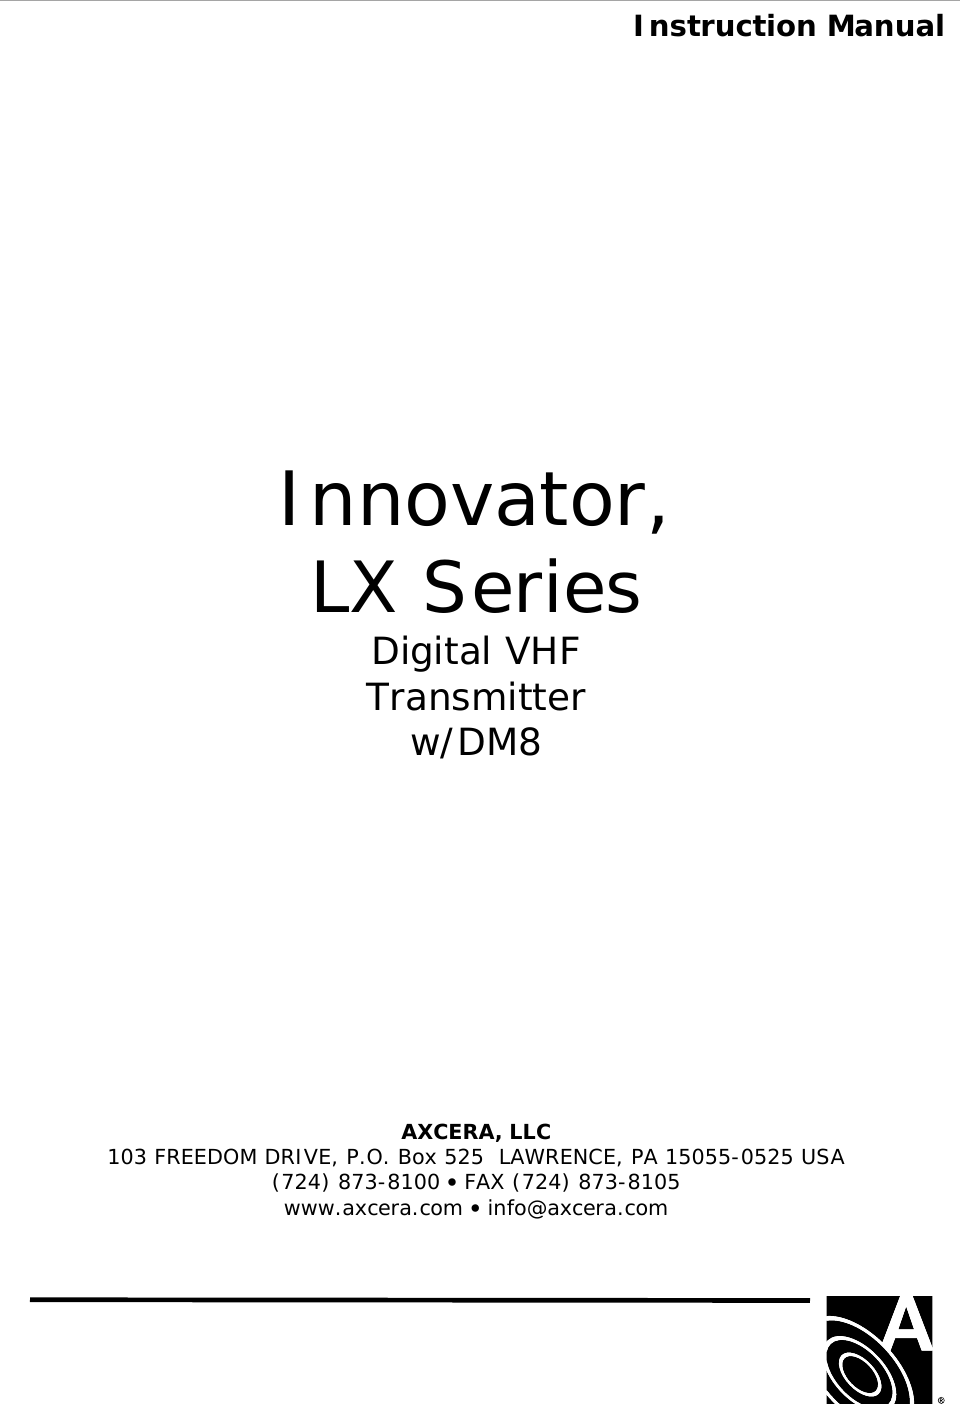  Instruction Manual                  Innovator, LX Series Digital VHF Transmitter w/DM8            AXCERA, LLC  103 FREEDOM DRIVE, P.O. Box 525  LAWRENCE, PA 15055-0525 USA (724) 873-8100 • FAX (724) 873-8105 www.axcera.com • info@axcera.com      